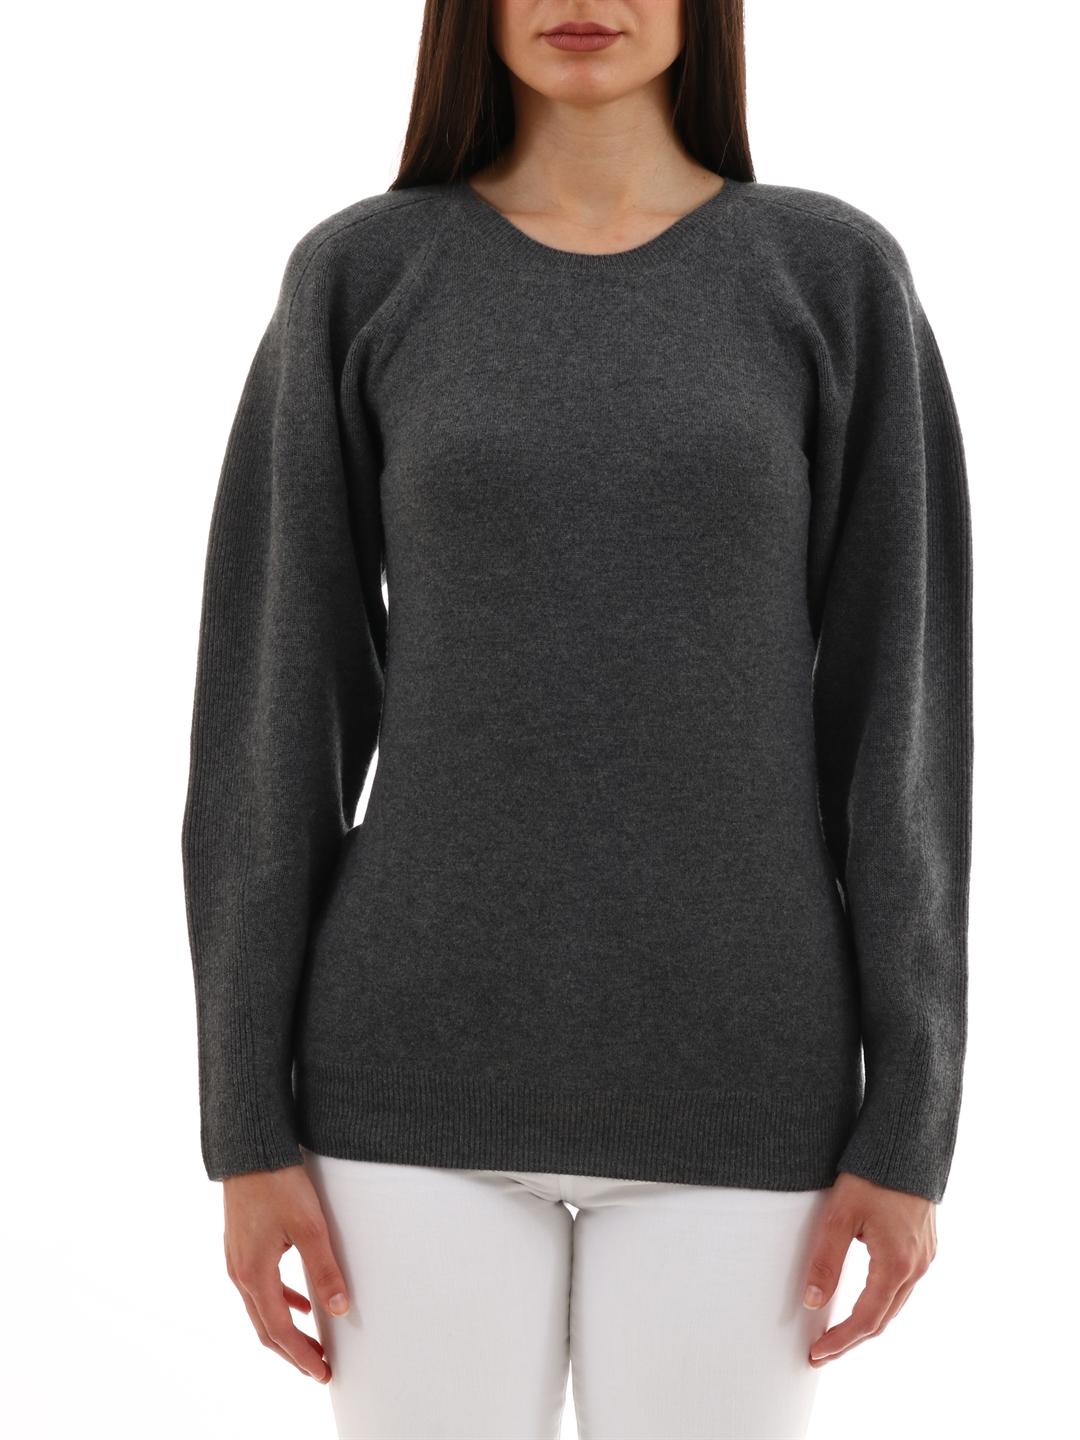 Stella McCartney Gray Wool Sweater - Save 32% - Lyst